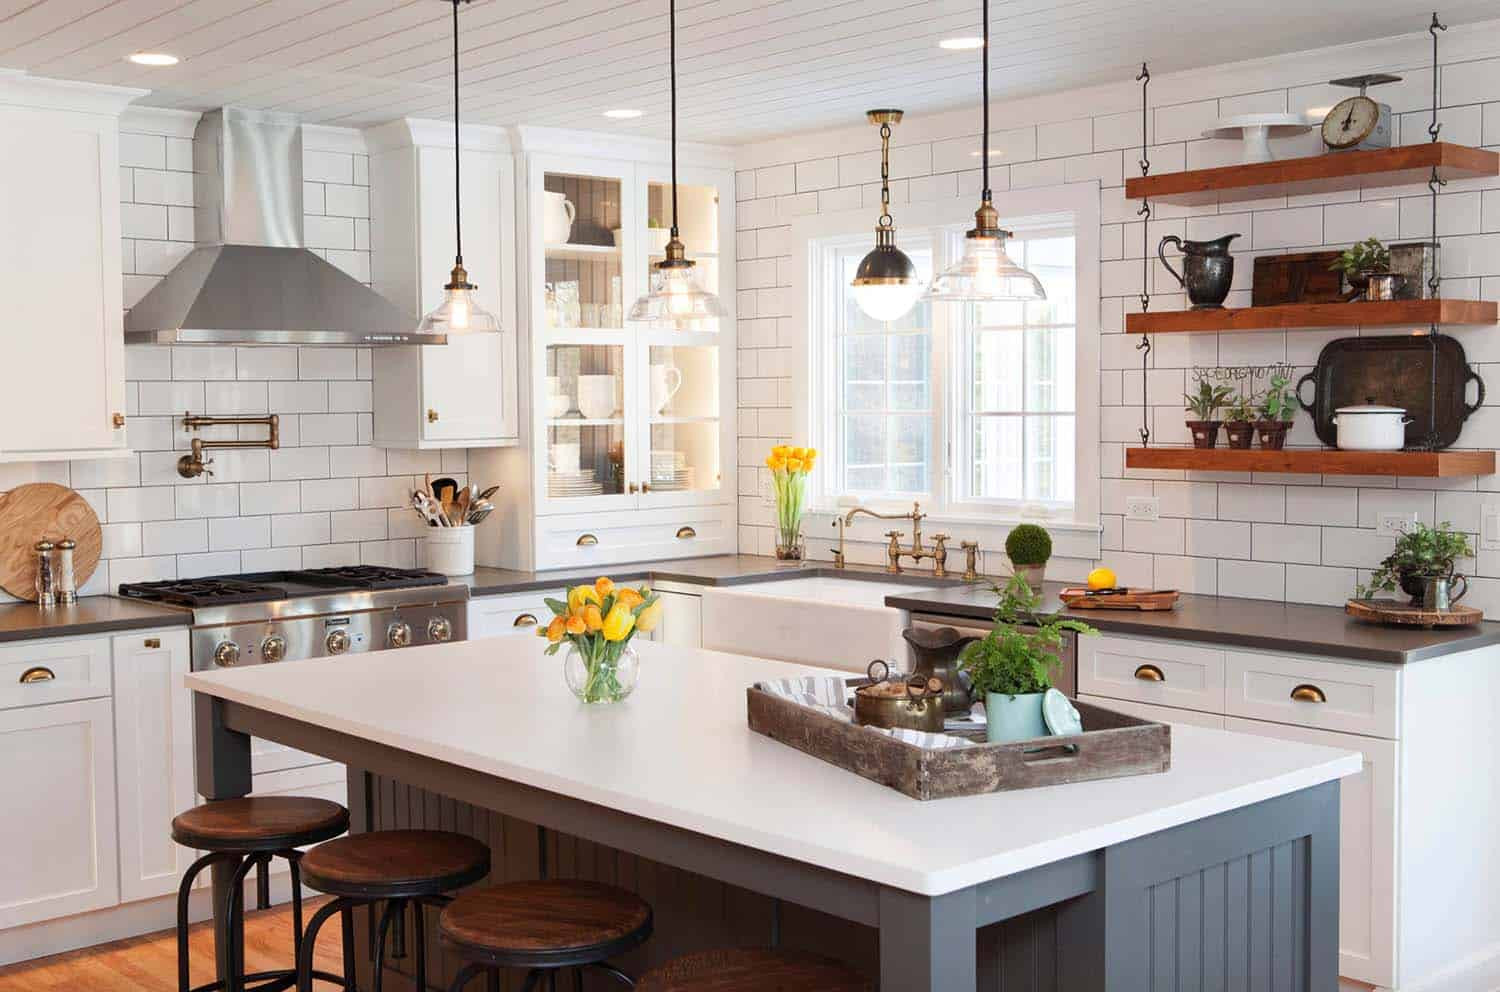 Best ideas about Farmhouse Kitchen Ideas
. Save or Pin 35 Amazingly creative and stylish farmhouse kitchen ideas Now.